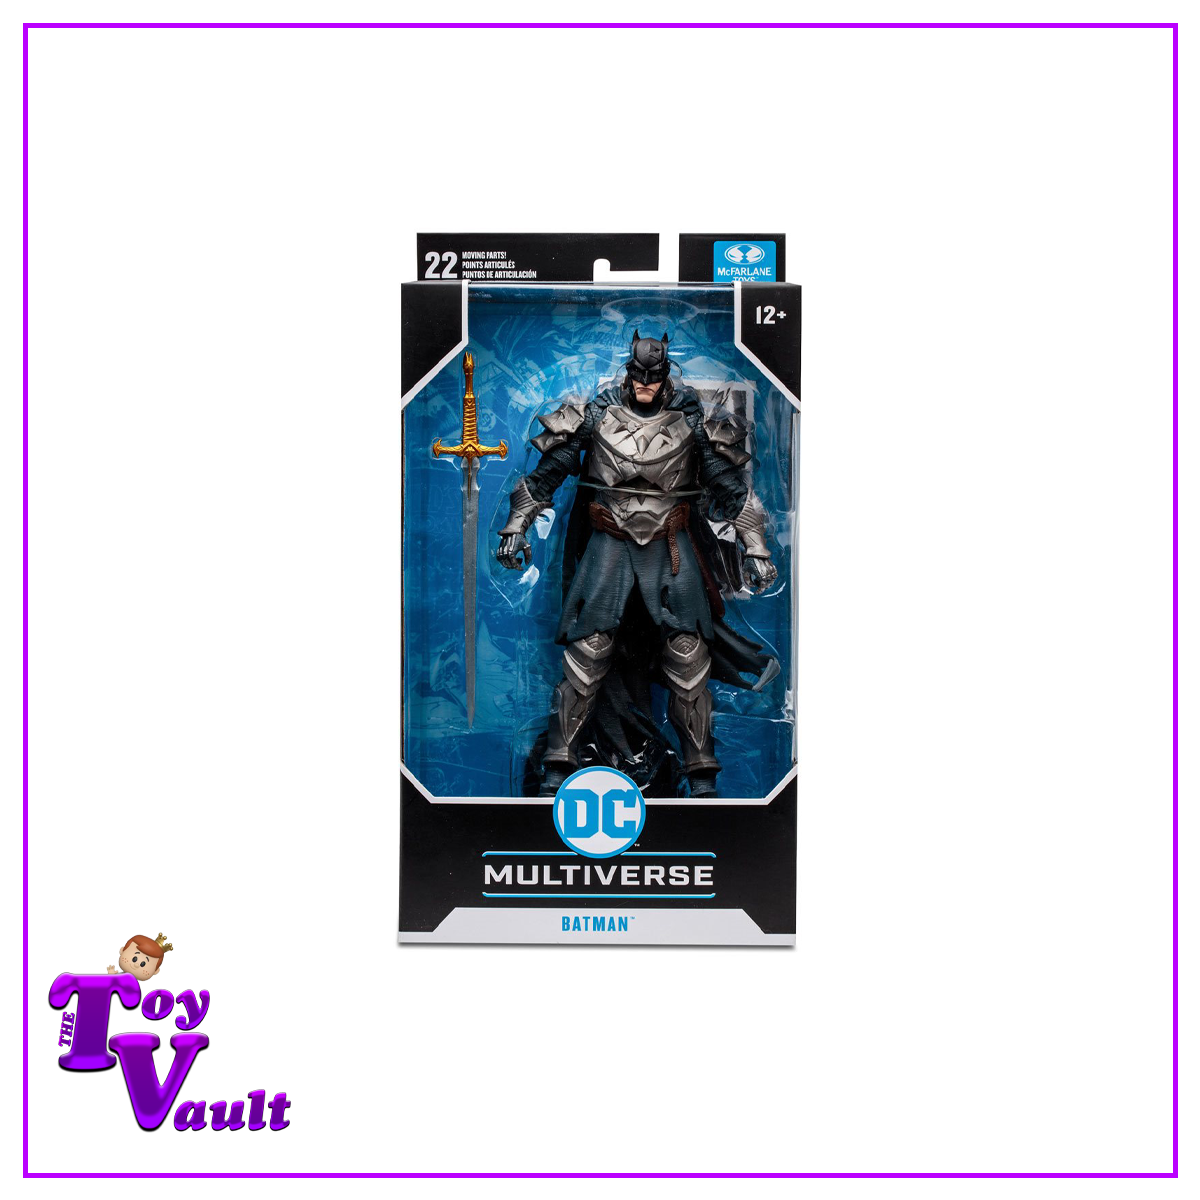 McFarlane Toys DC Heroes Multiverse Dark Knights of Steel - Batman 7-inch Action Figure Preorder